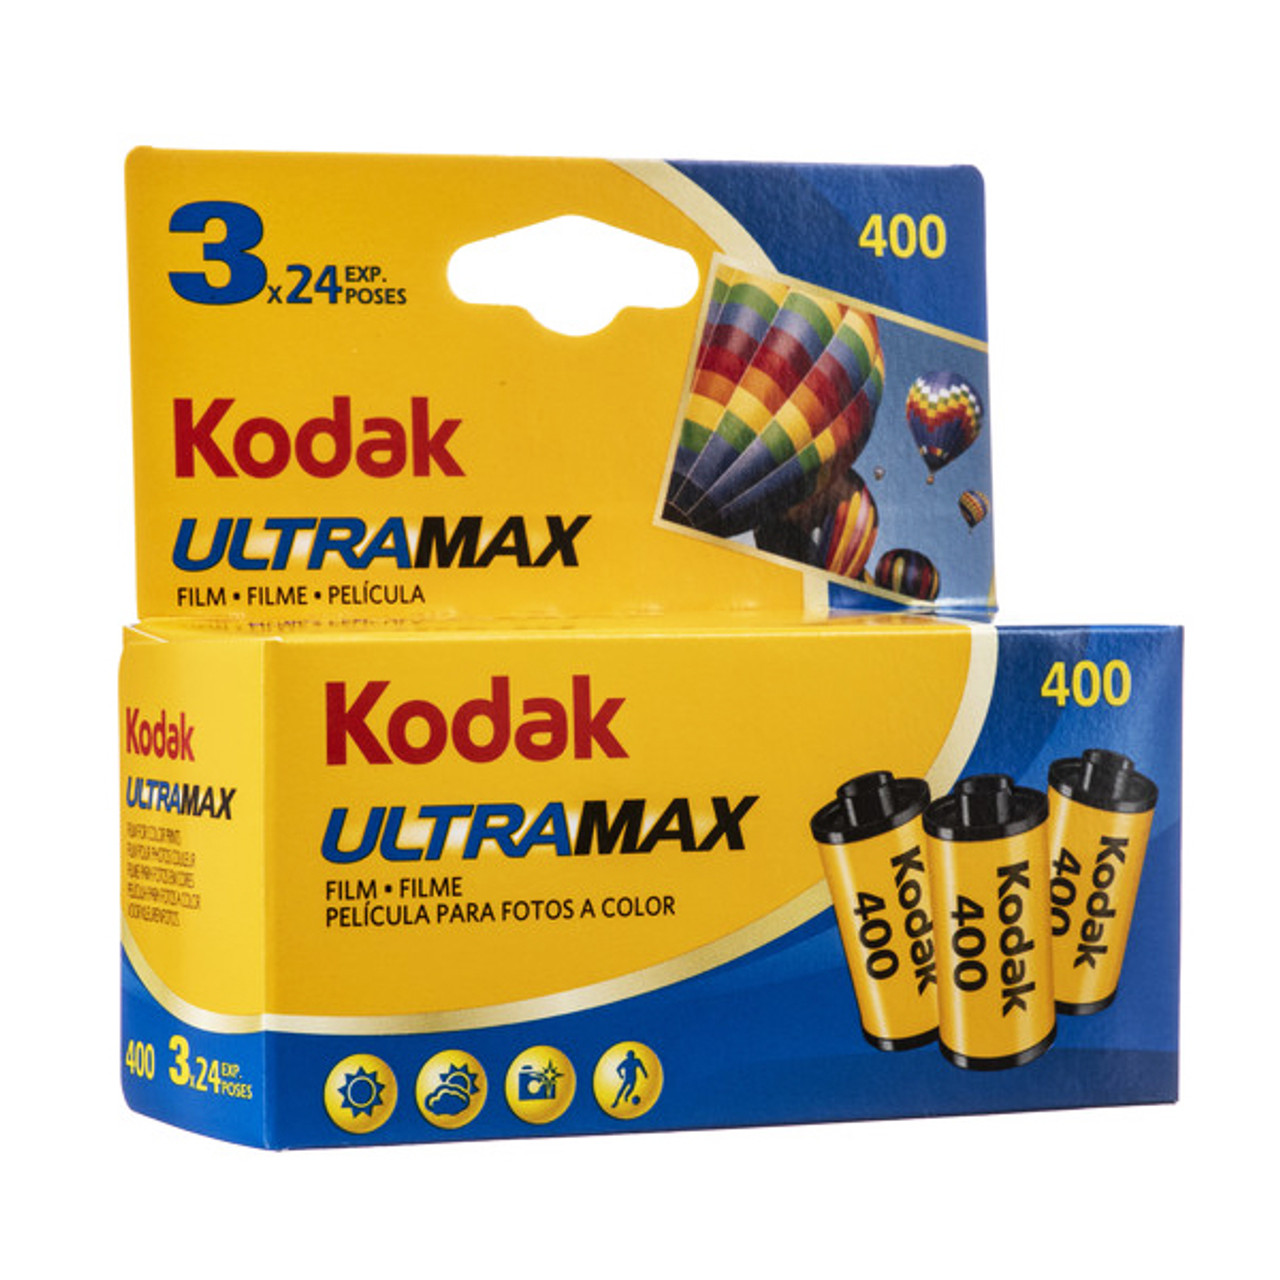 Kodak Ultramax 400 colour film